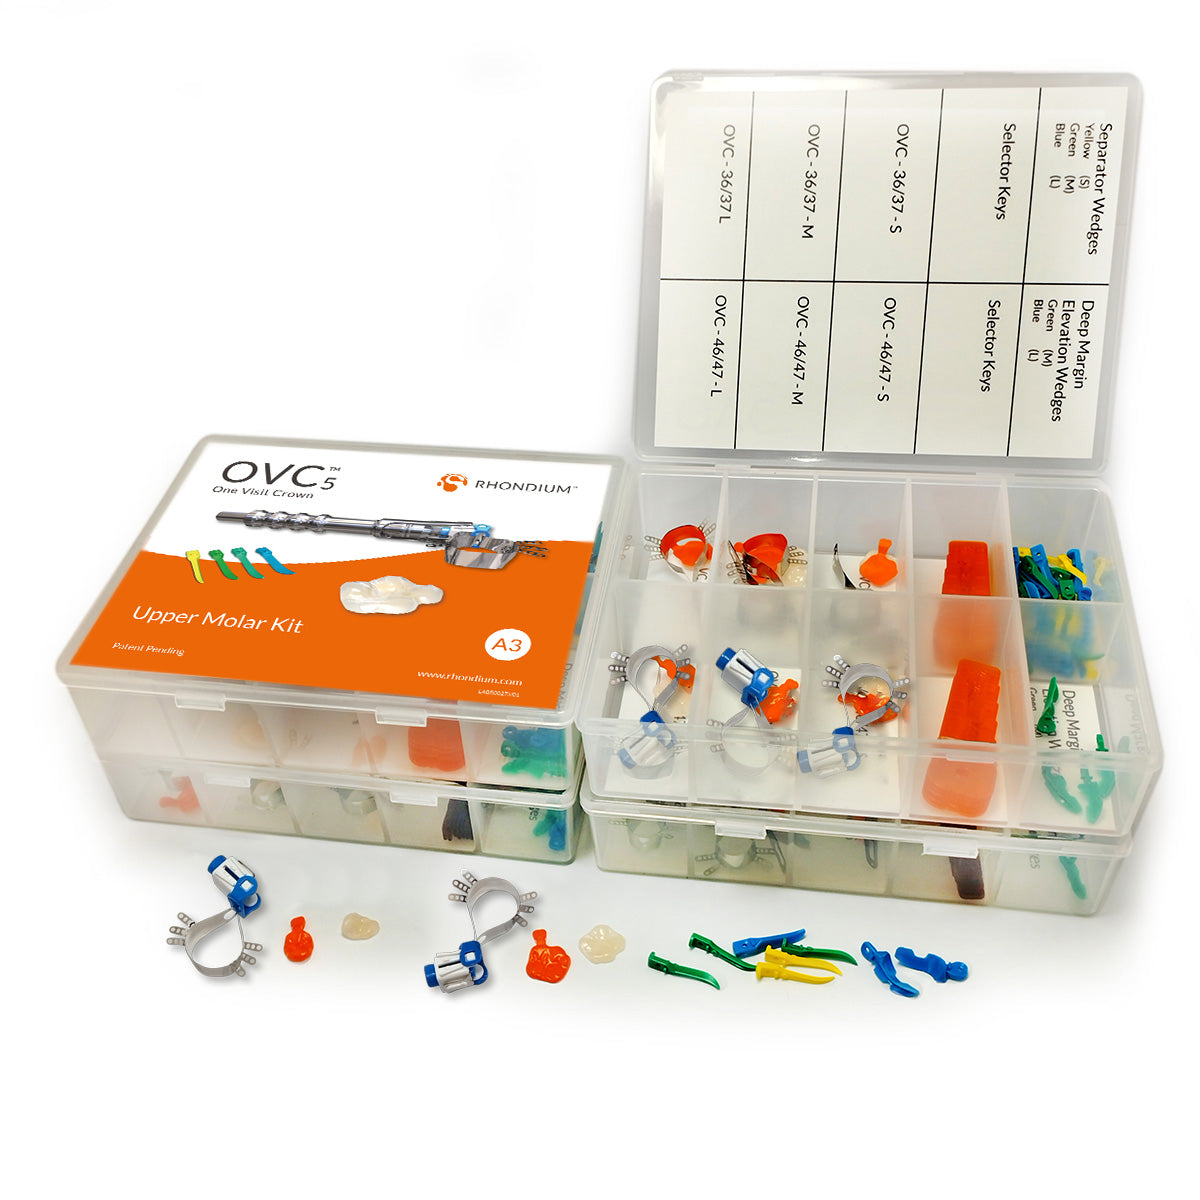 OVC5 Molar & Premolar Full Kit